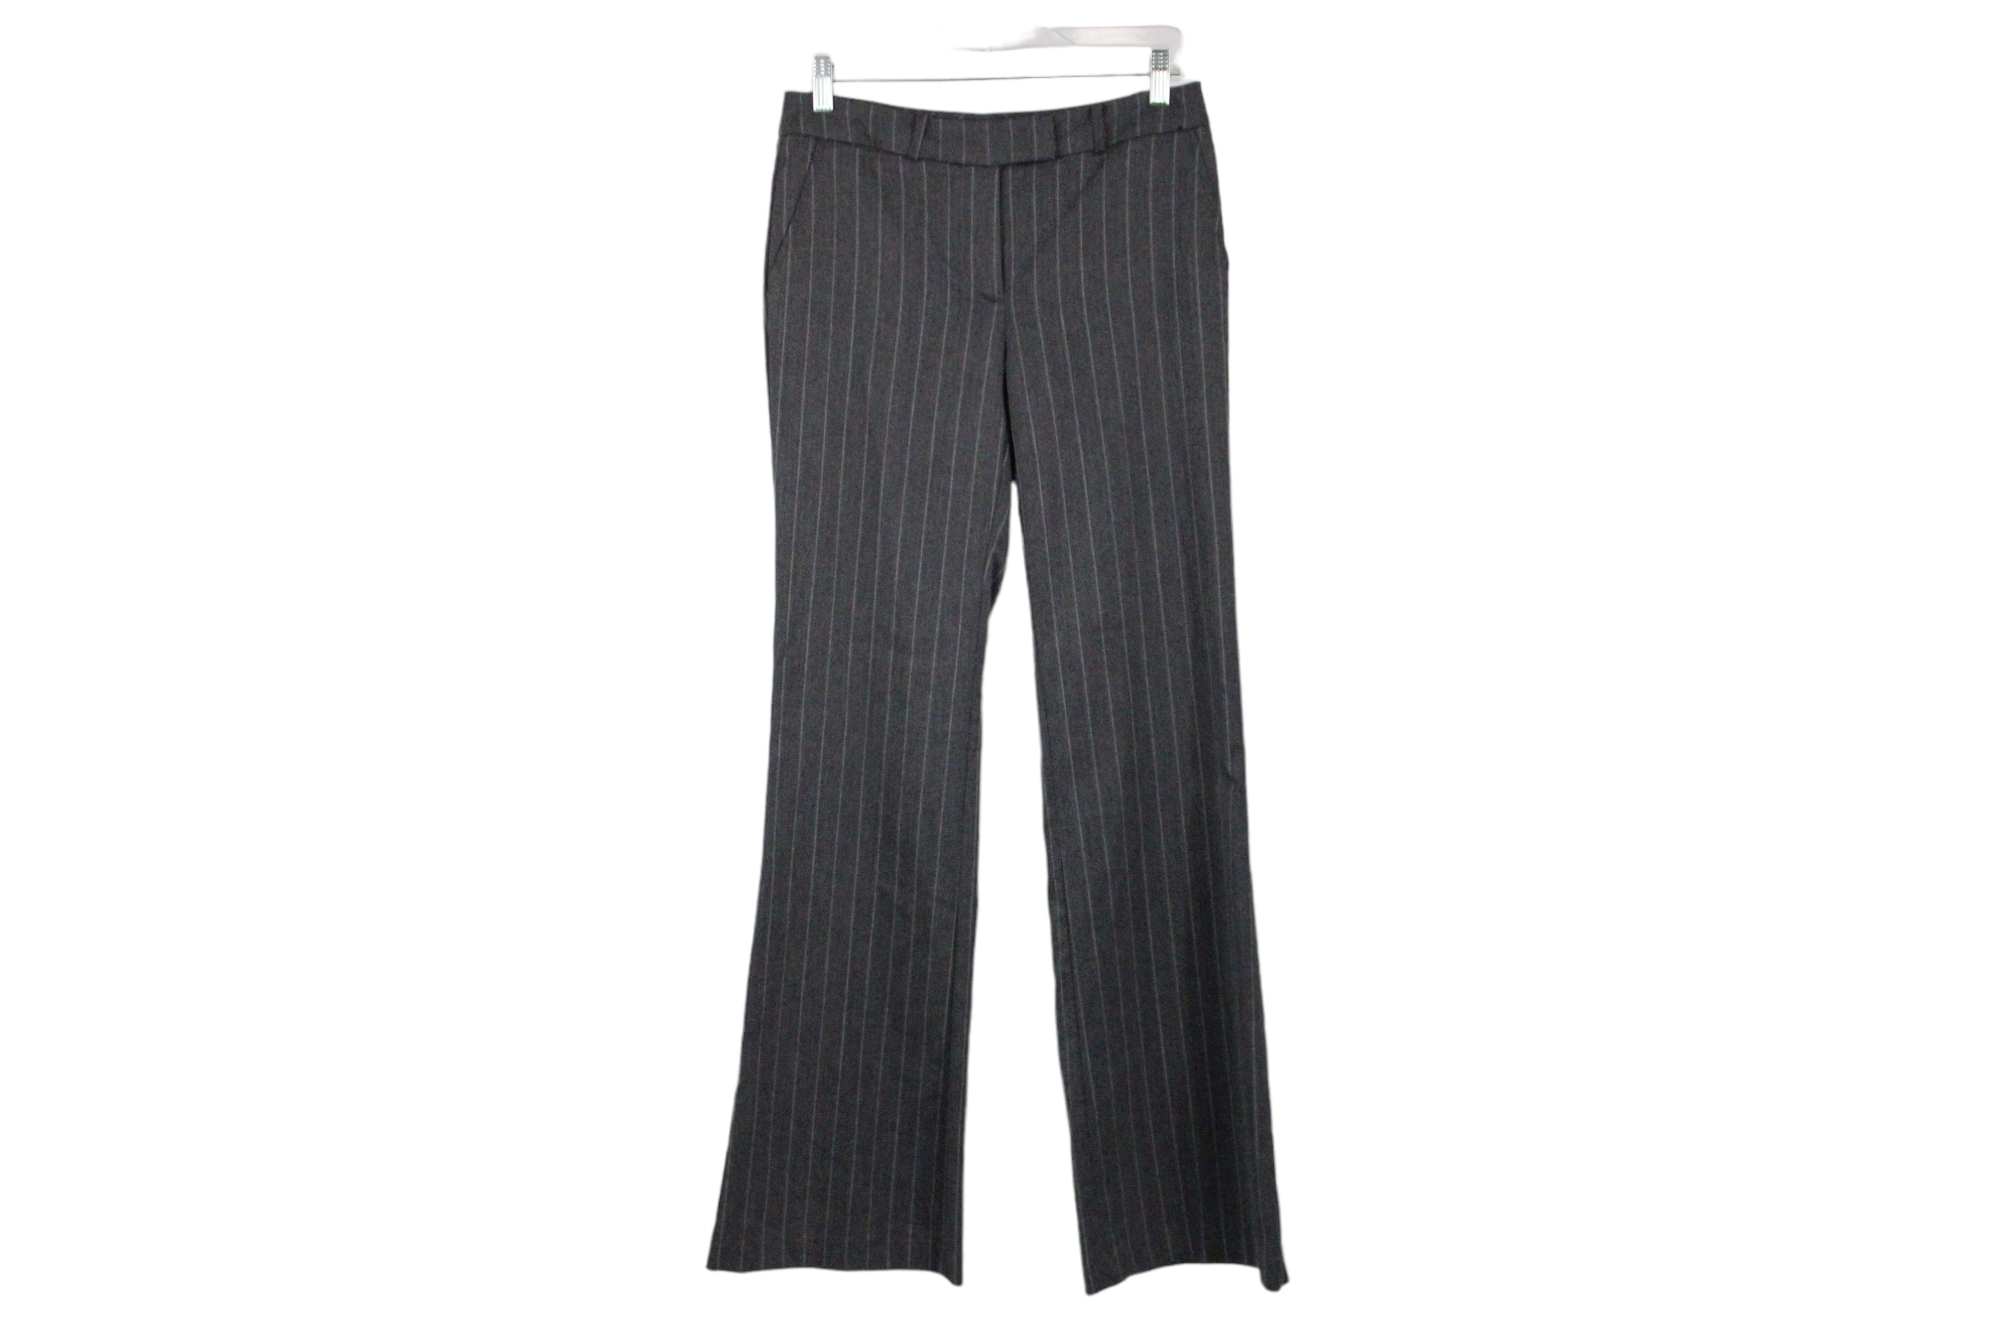 Michael Kors Collection Navy Blue Pinstriped Pants sz 6